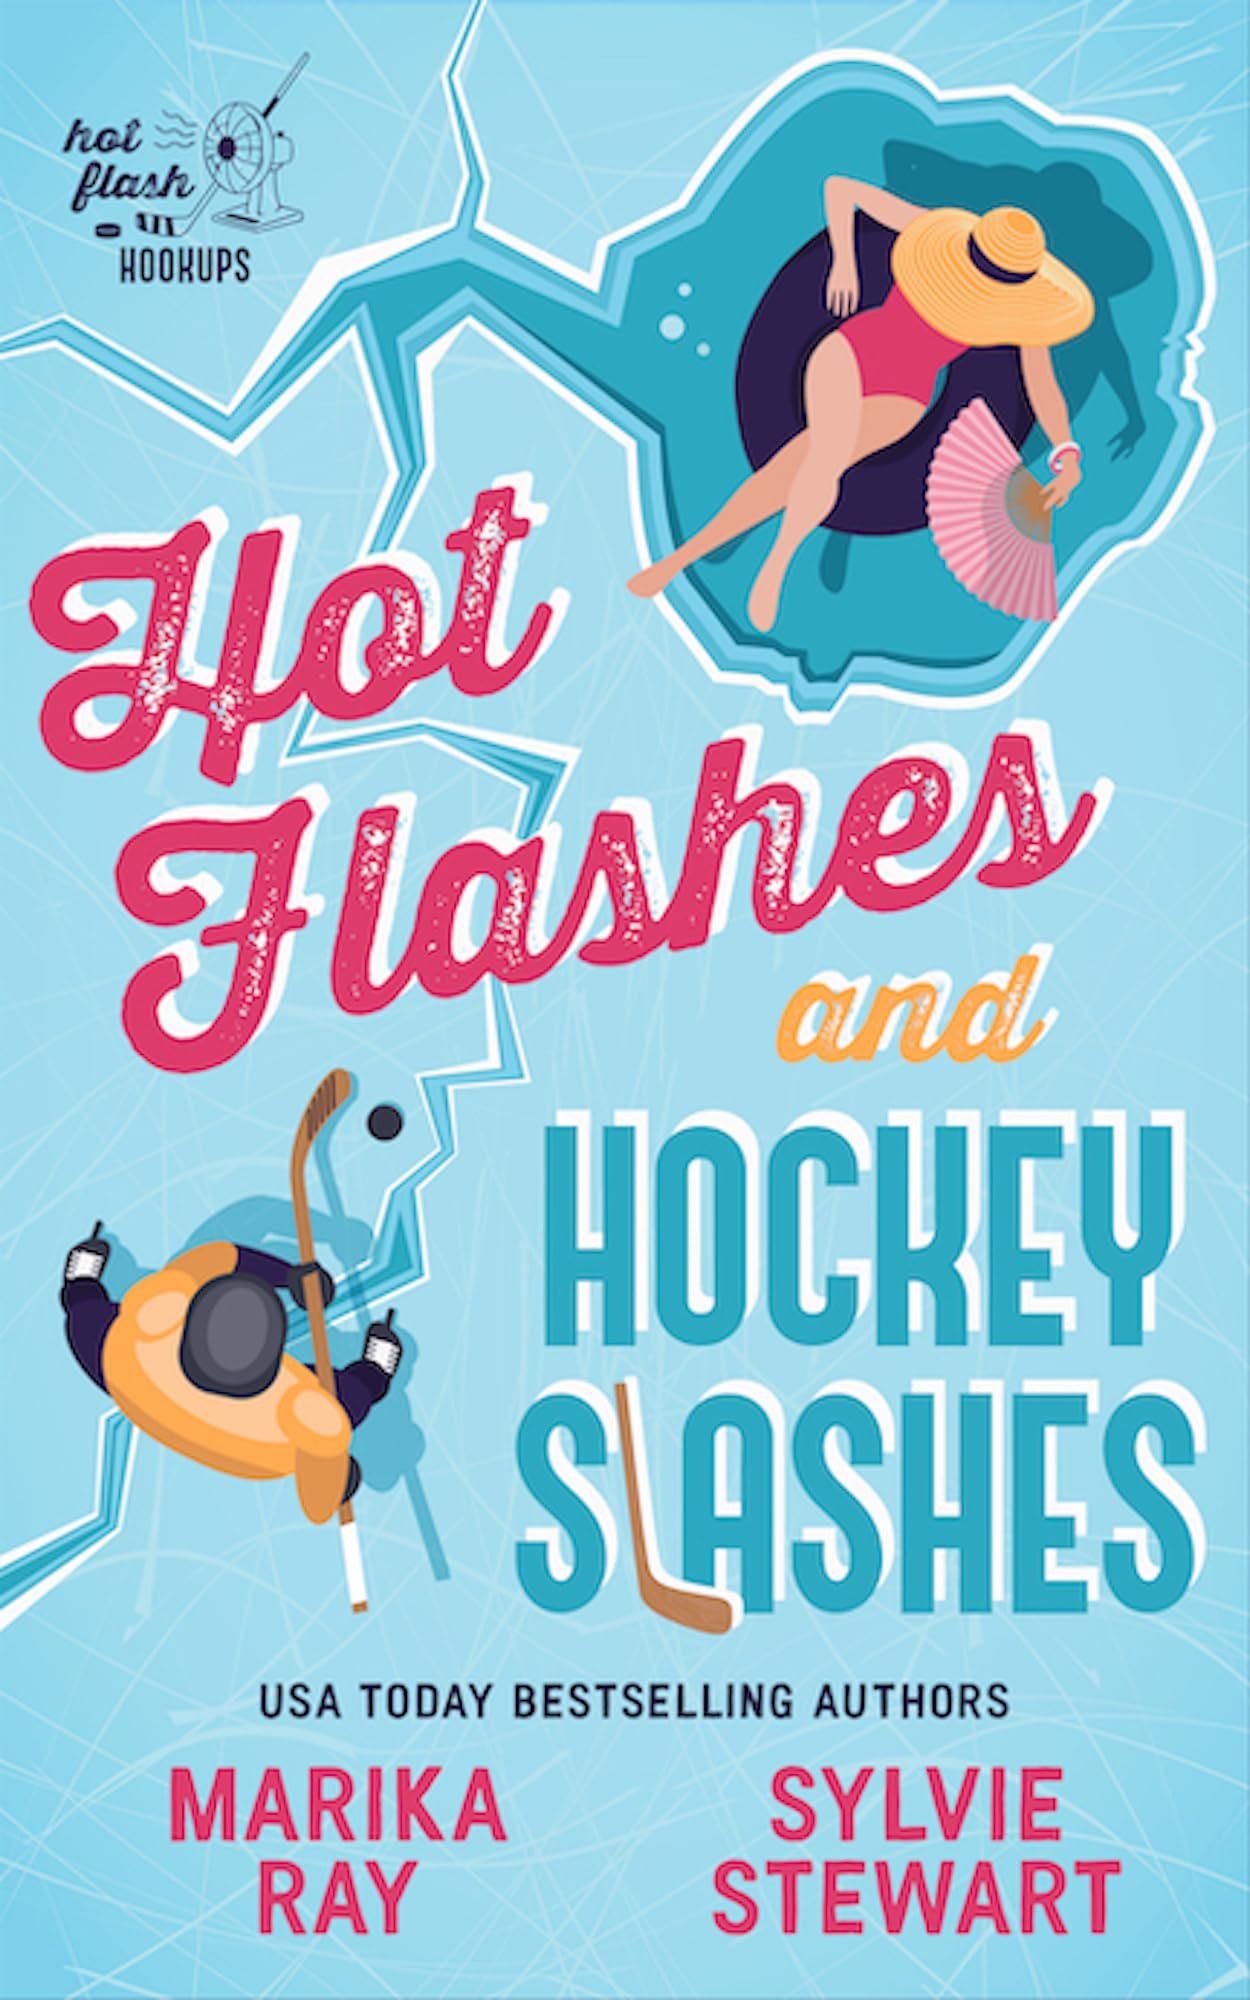 Hot Flashes and Hockey Slashes (Hot Flash Hookups Book 1) Cover